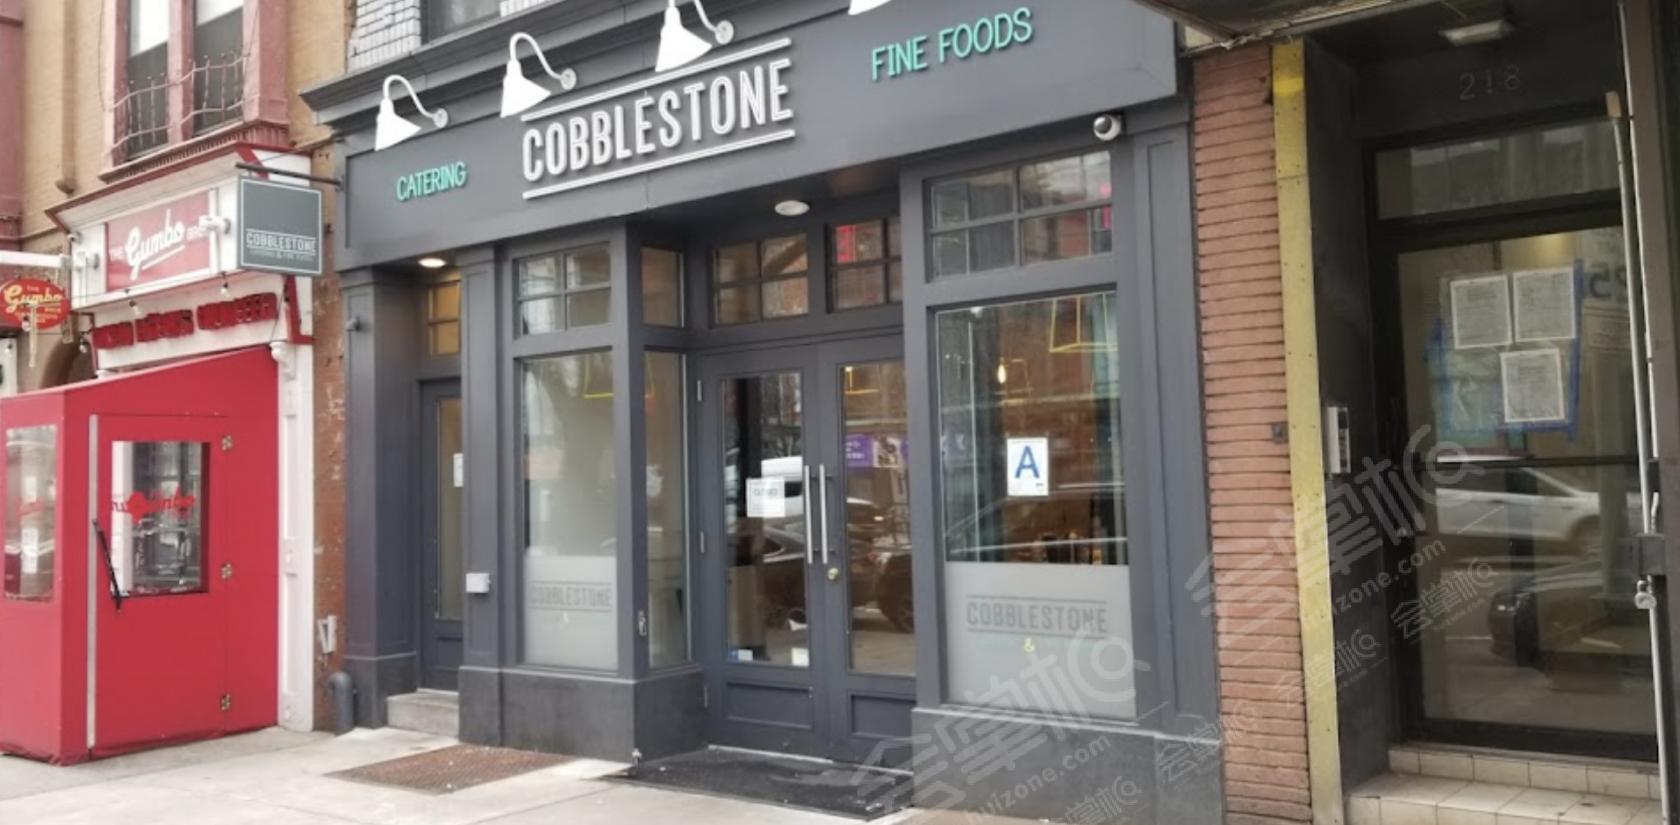 Cobblestone Catering & Fine Foods